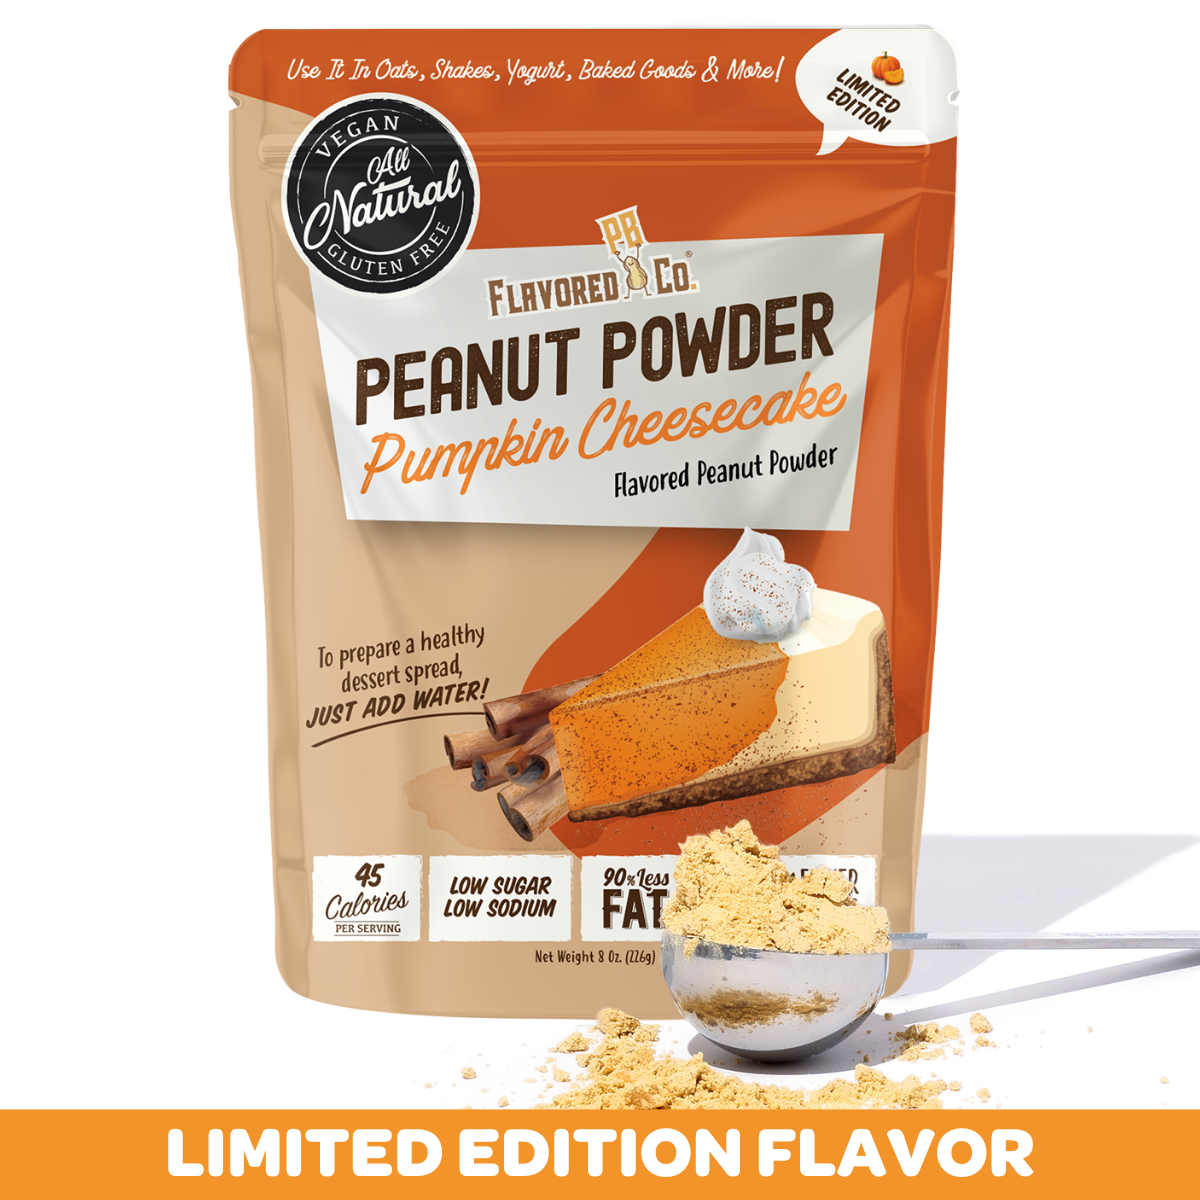 Pumpkin Cheesecake Flavored Peanut Powder | Limited Edition